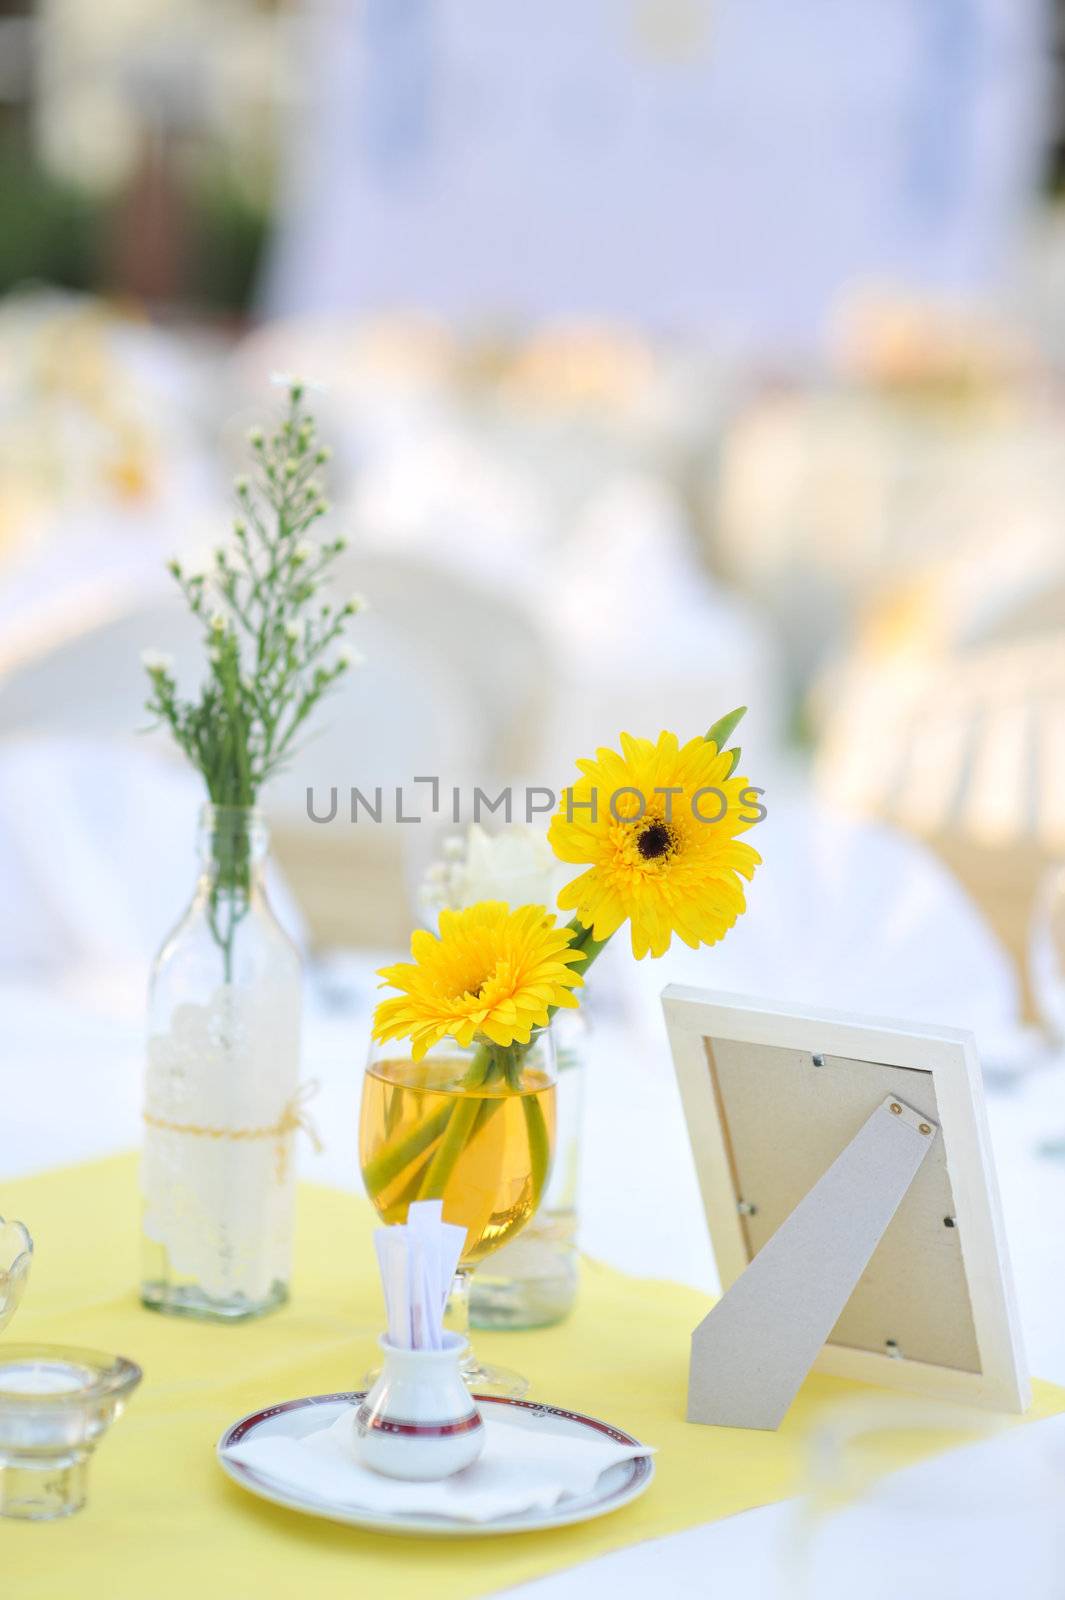 Wedding table setting by szefei